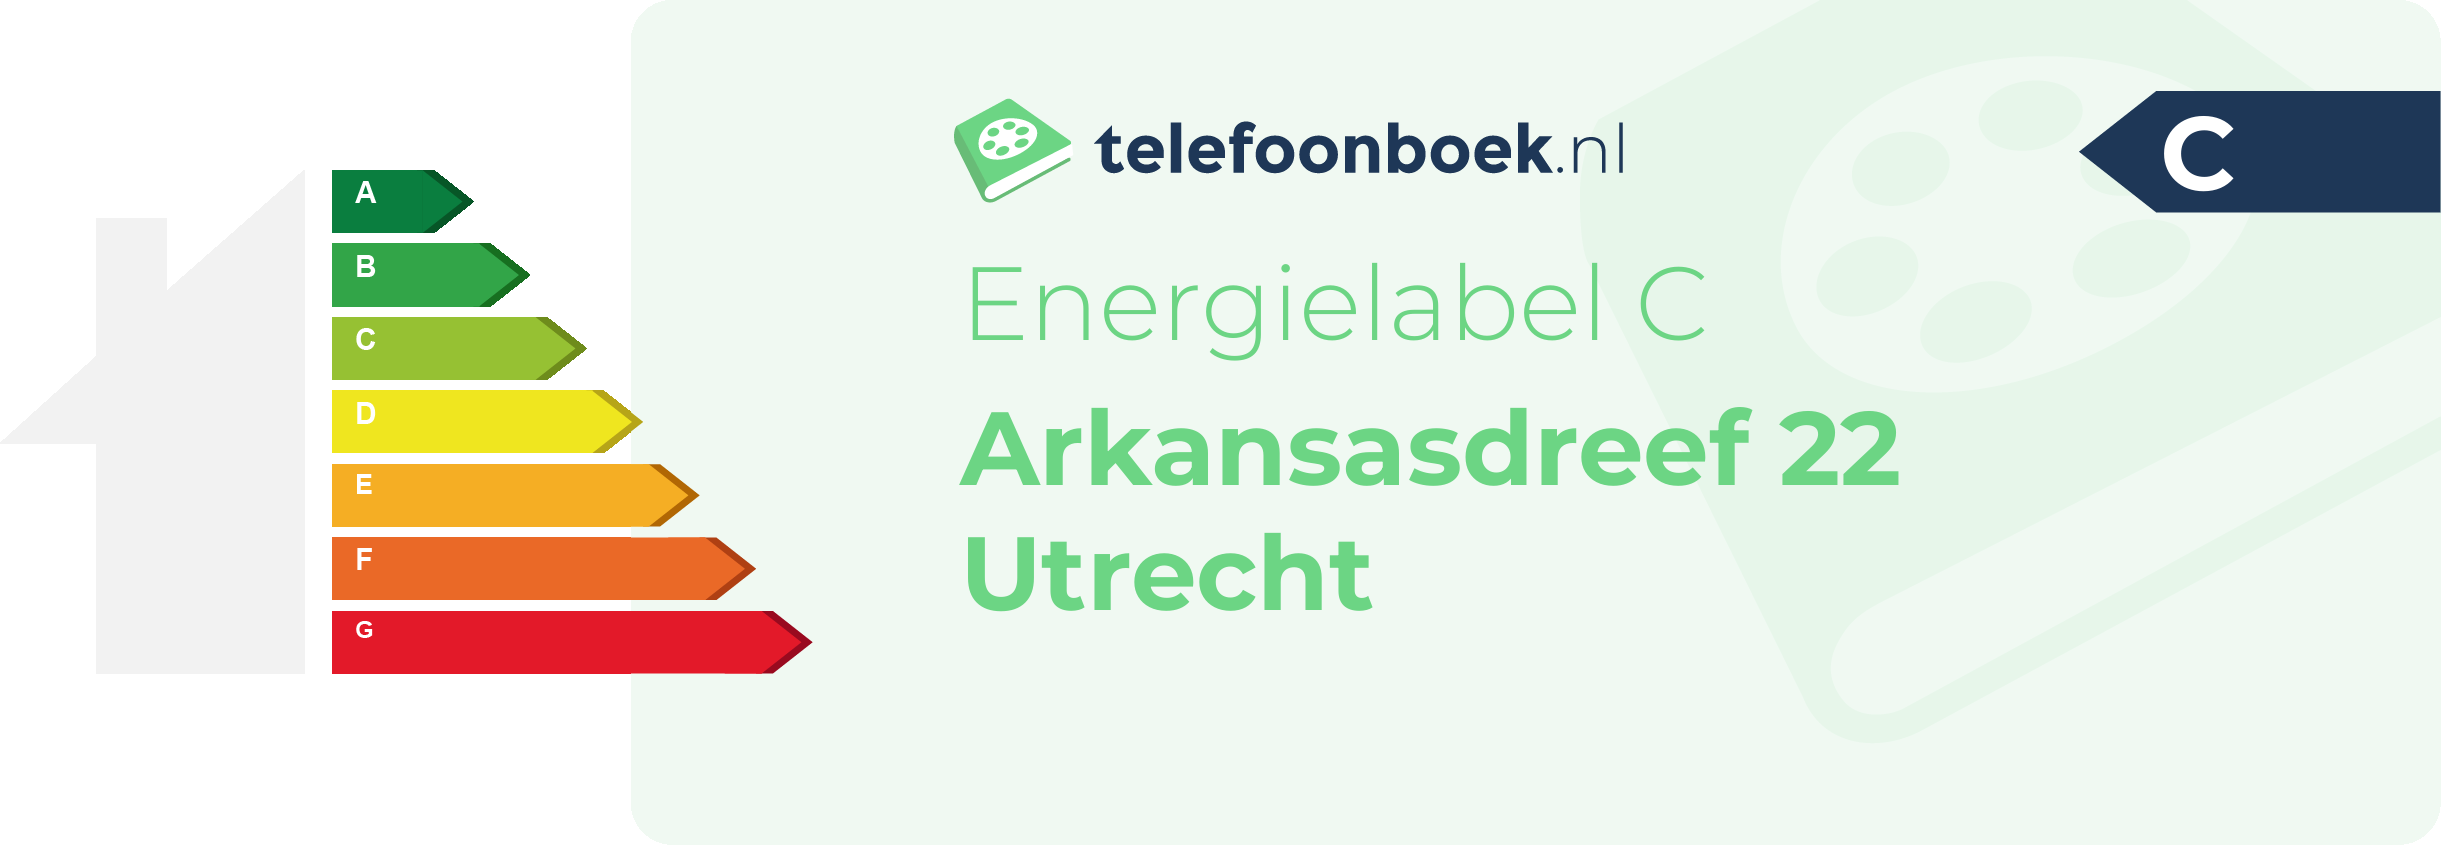 Energielabel Arkansasdreef 22 Utrecht